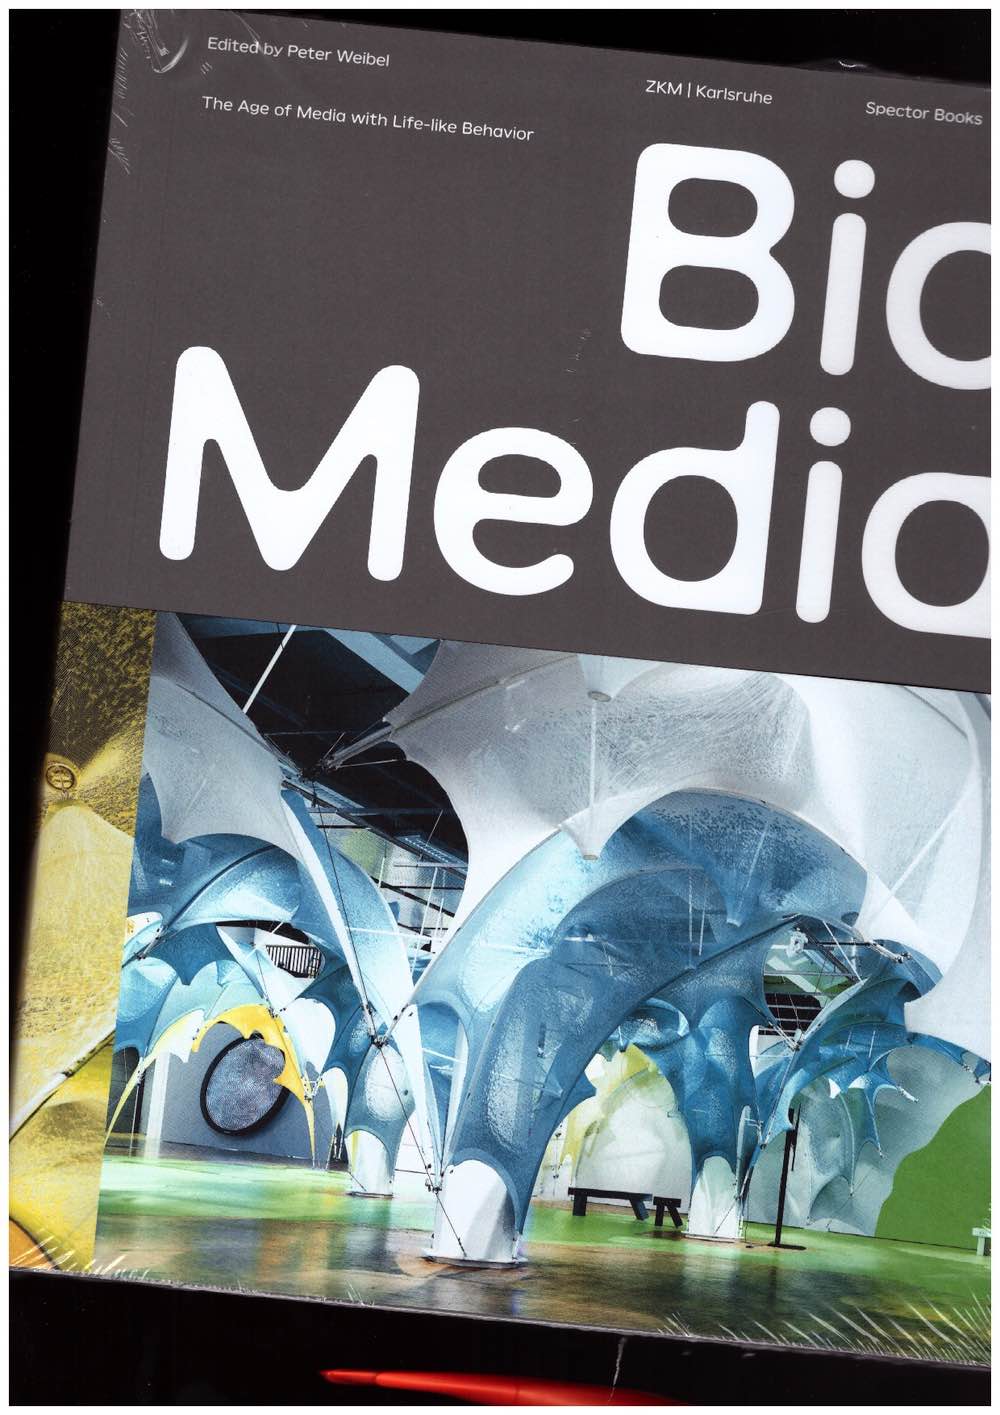 WEIBEL, Peter (ed.) - BioMedia. The Age of Media with Life-like Behavior